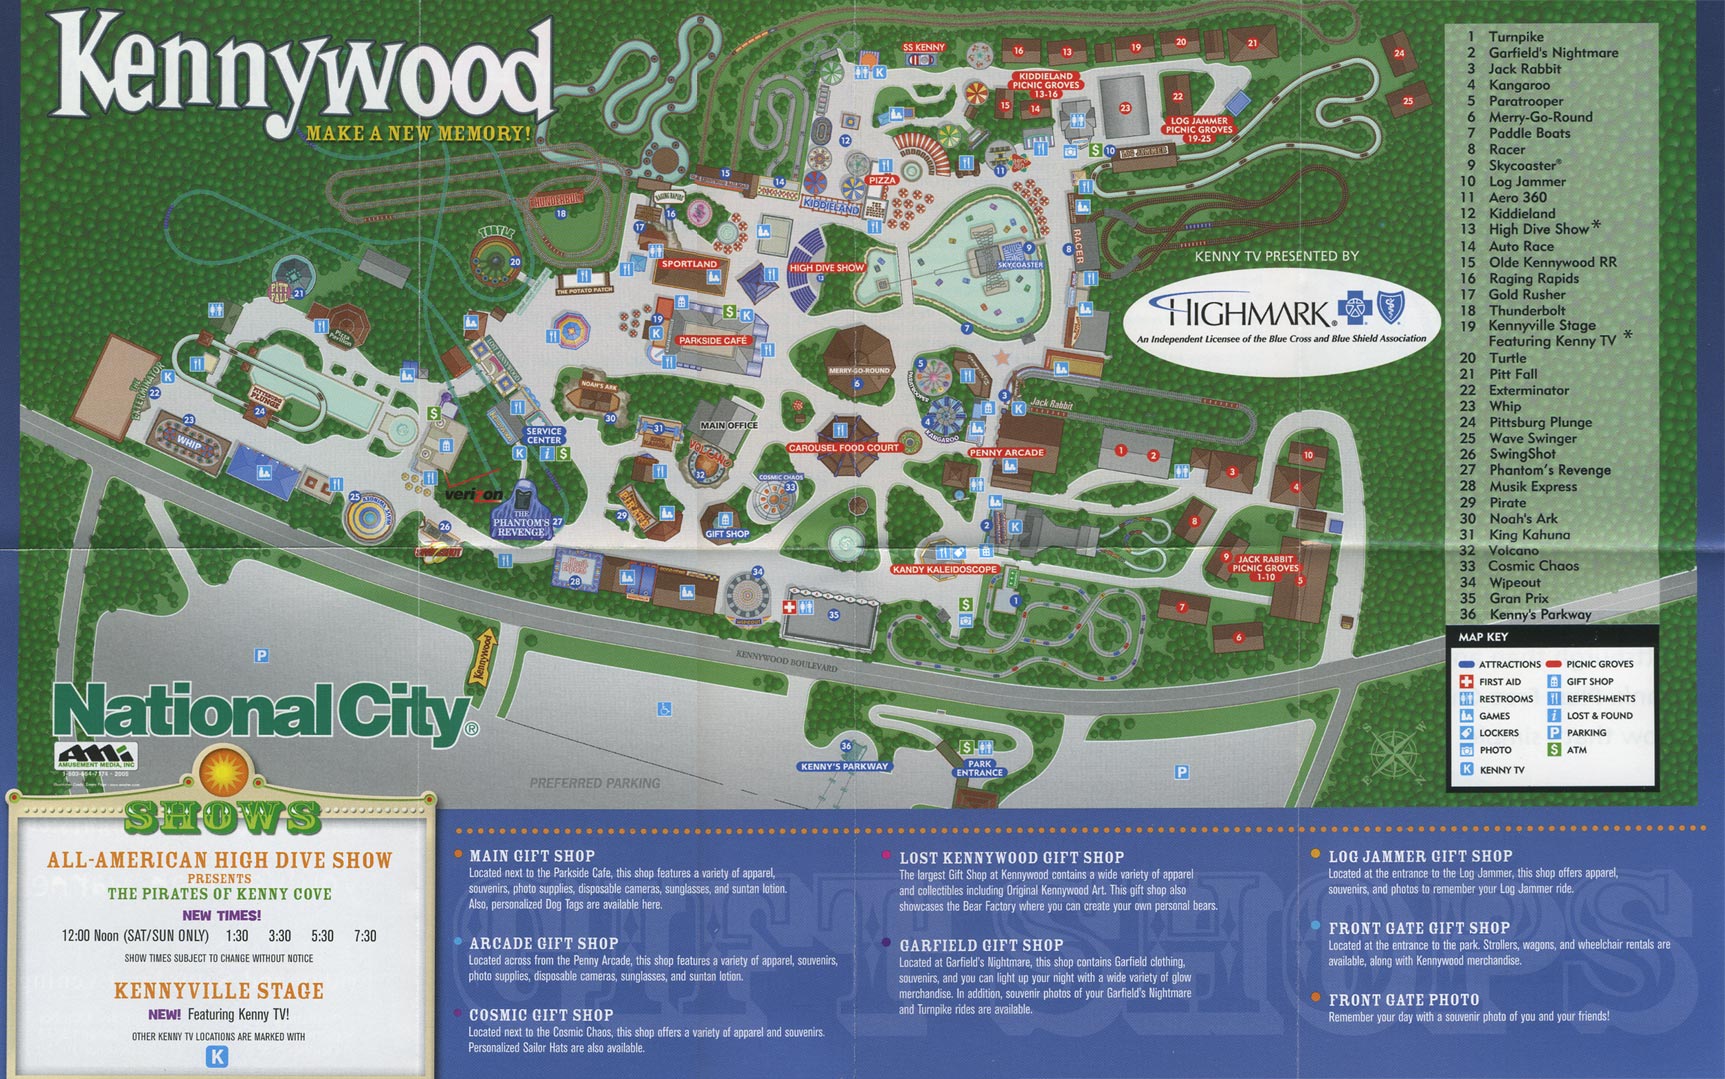 Theme Park Brochures Kennywood - Theme Park Brochures